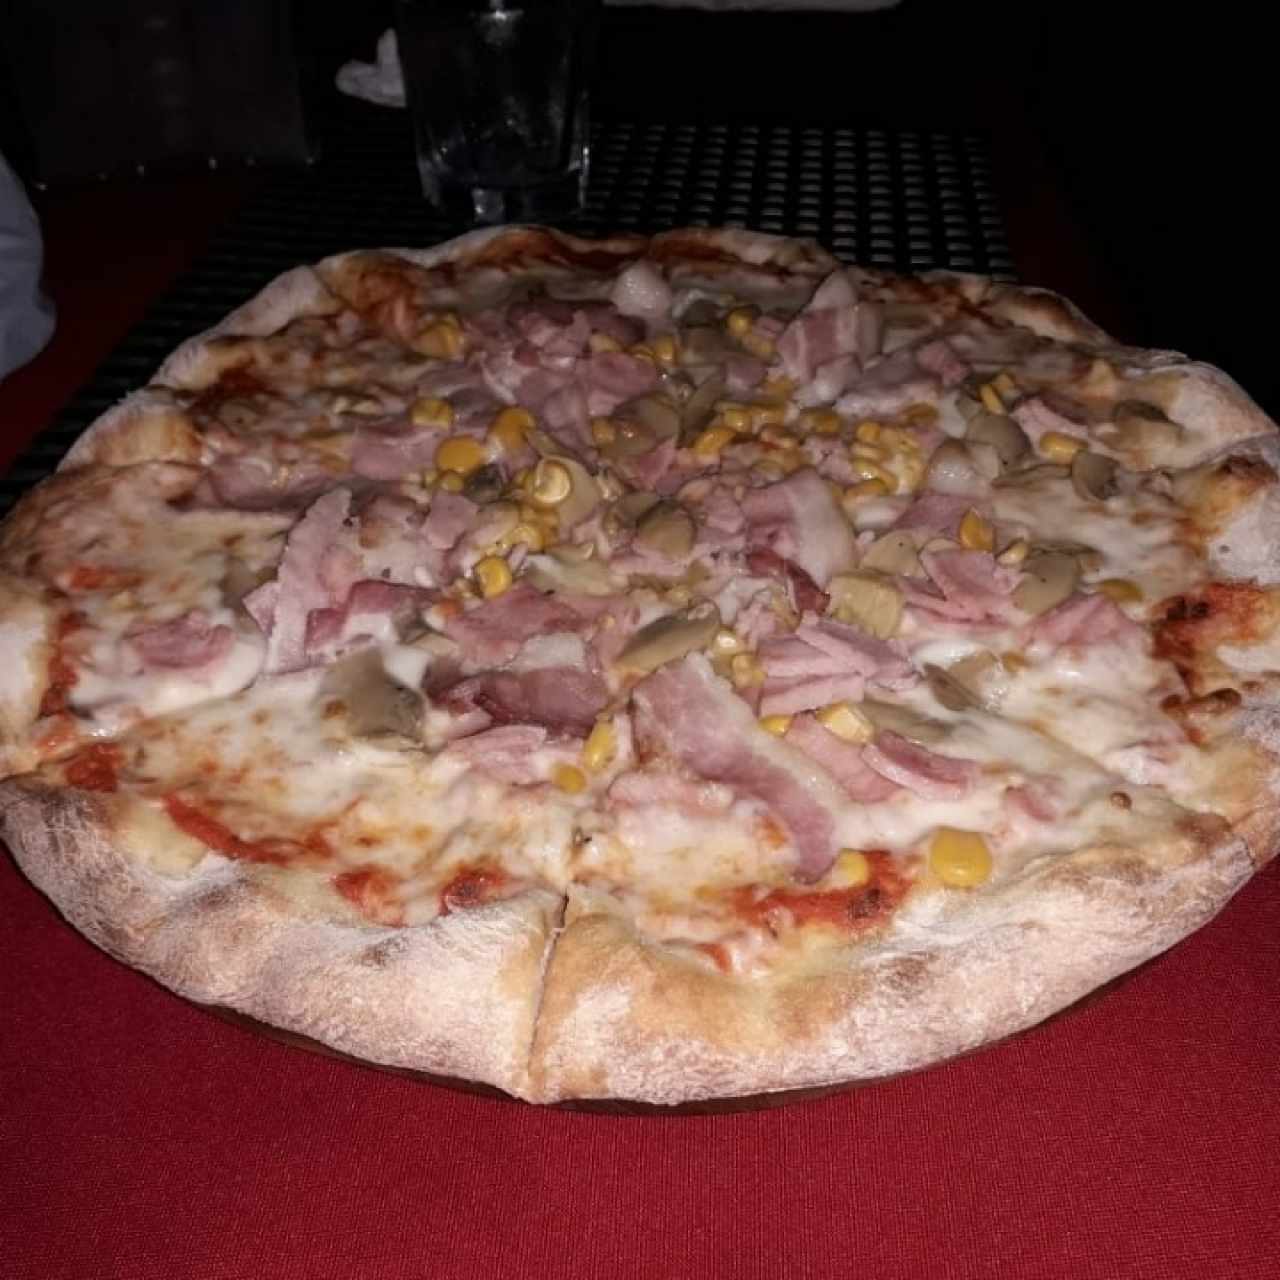 Pizza feeling